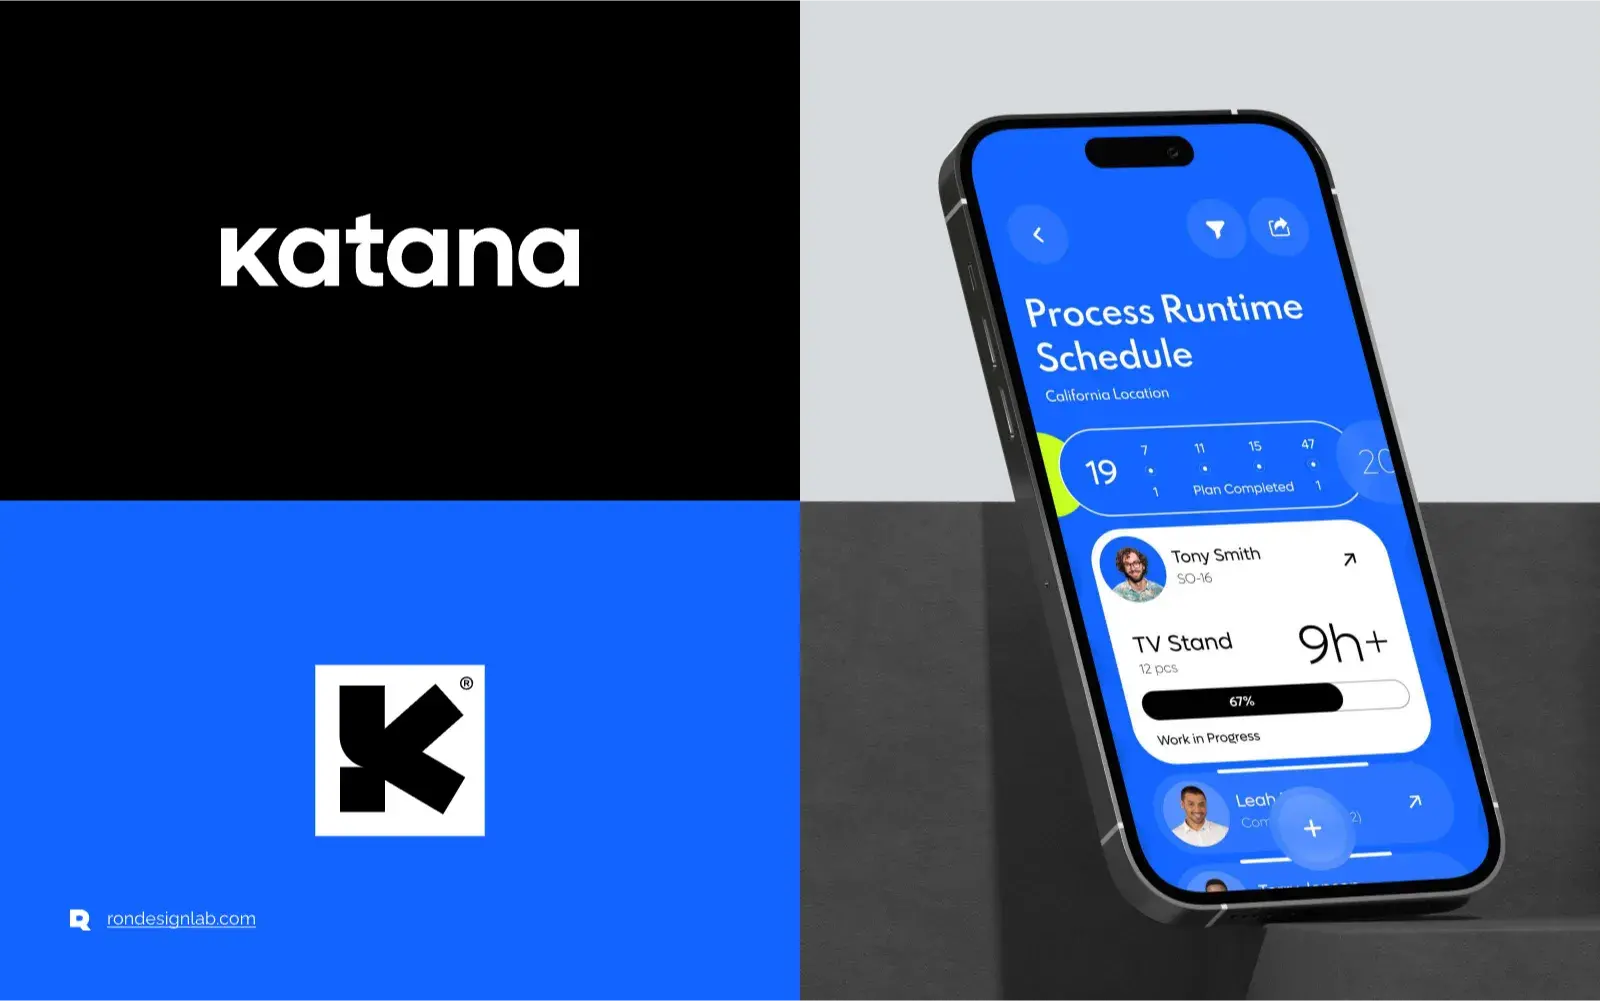 Katana - Manufacturing Resource Planning Software - Business